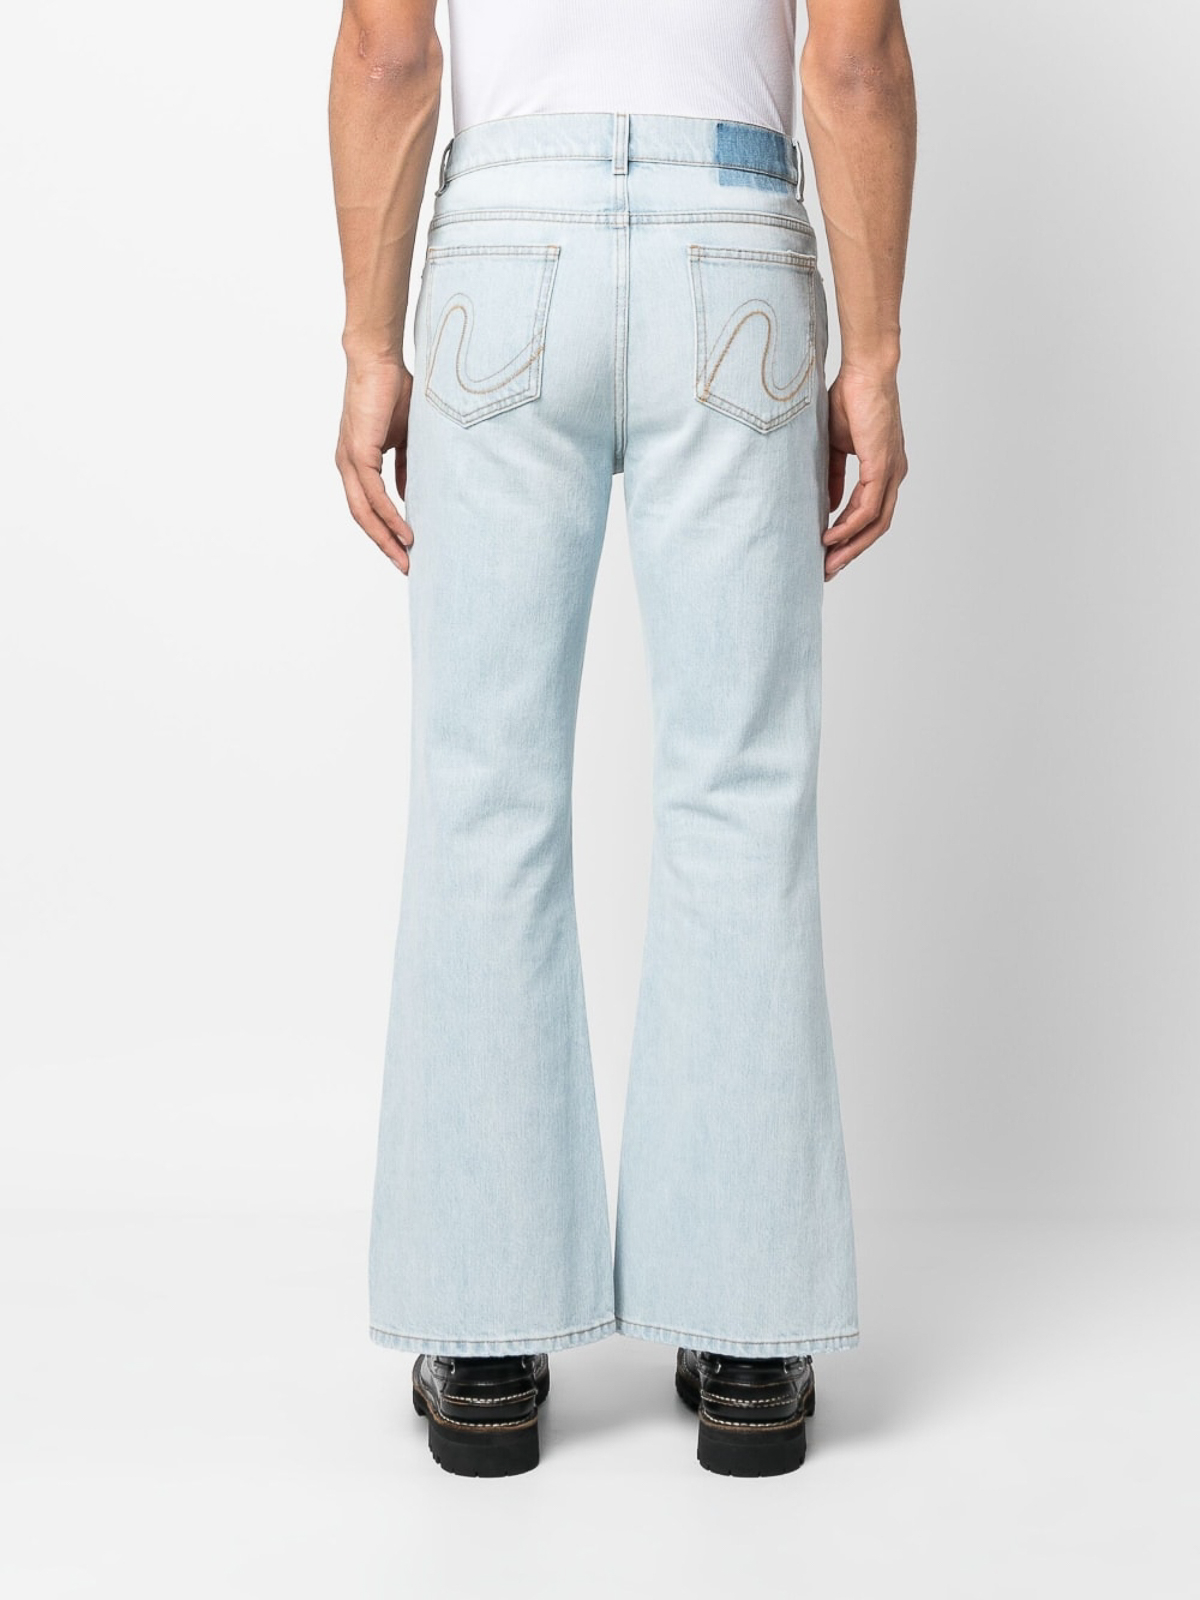 DONDUP: women's denim pants - Black | Dondup jeans DP651BS0033DDR4 online  at GIGLIO.COM